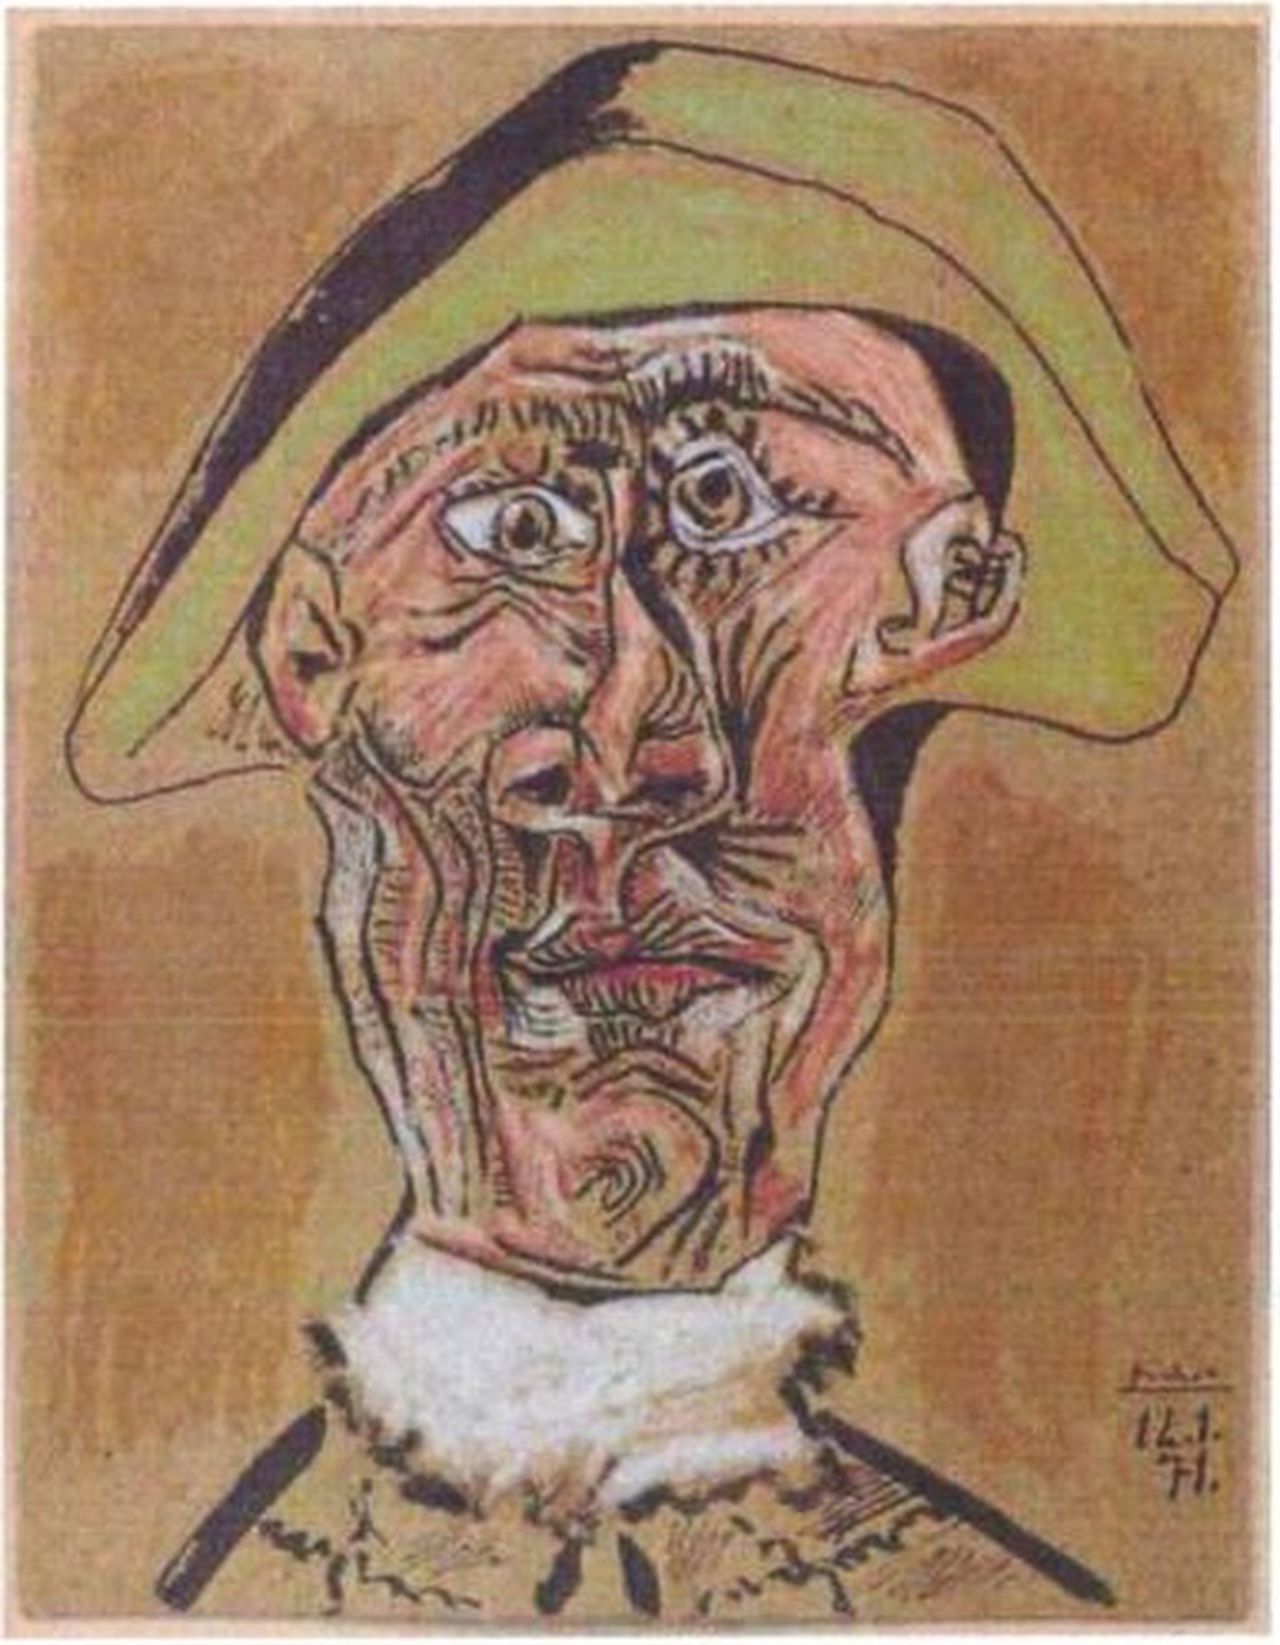 Tete d'Arlequin Pablo Picasso 1